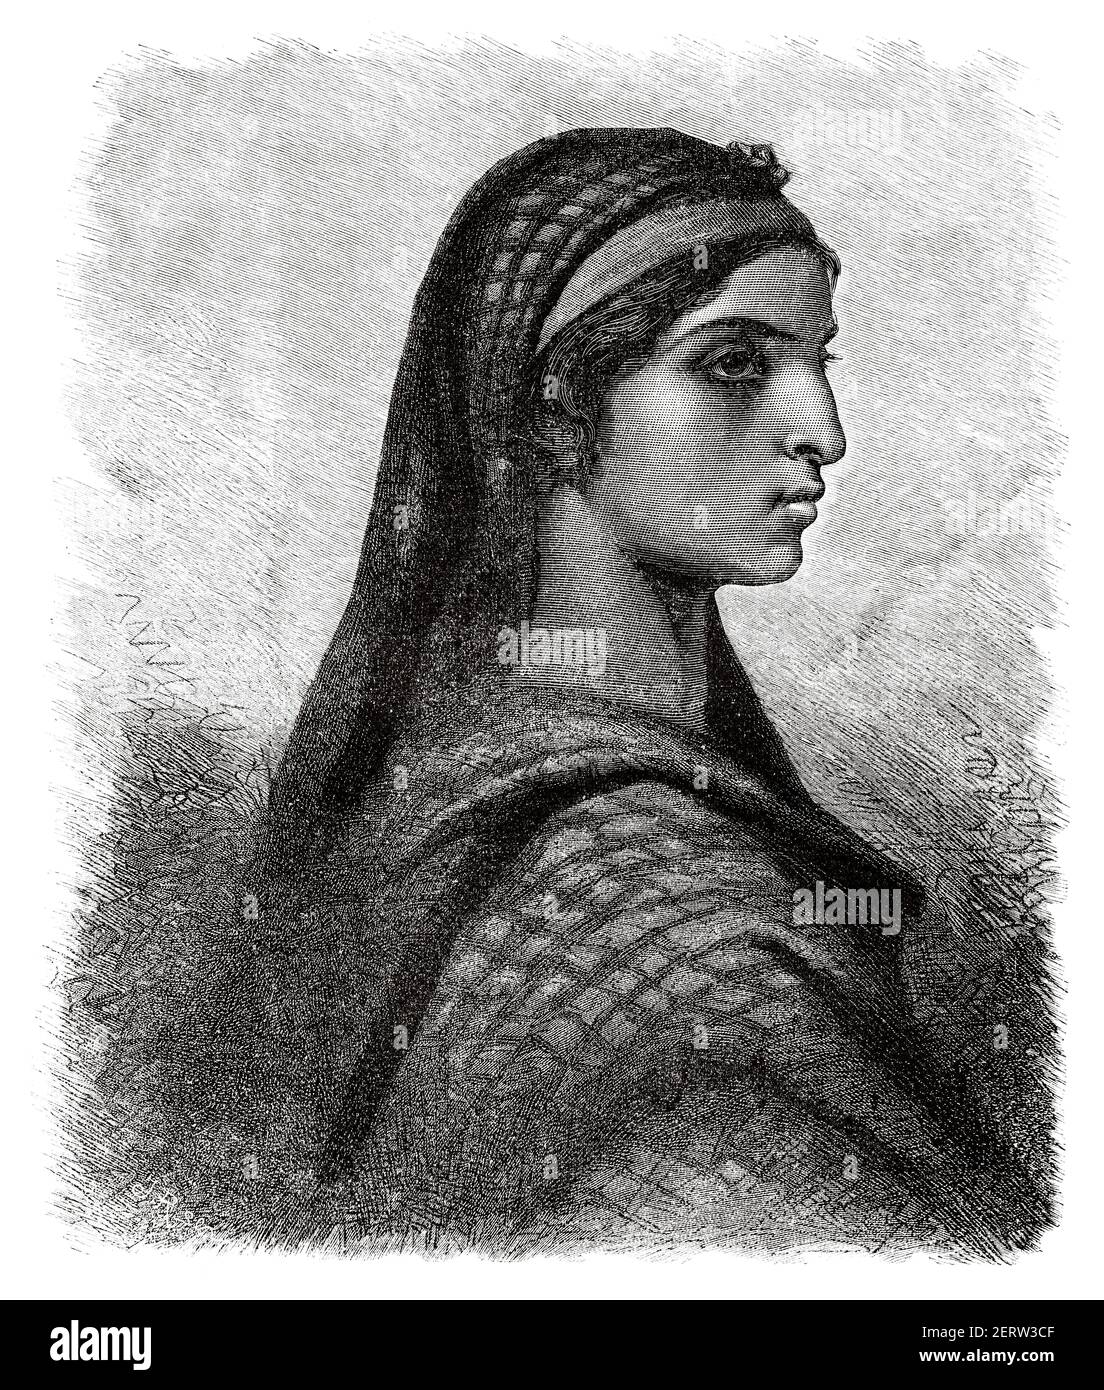 Portrait of an Egyptian woman of Coptic religion, Egypt 19th Century. Old XIX century engraved illustration, El Mundo Ilustrado 1880 Stock Photo